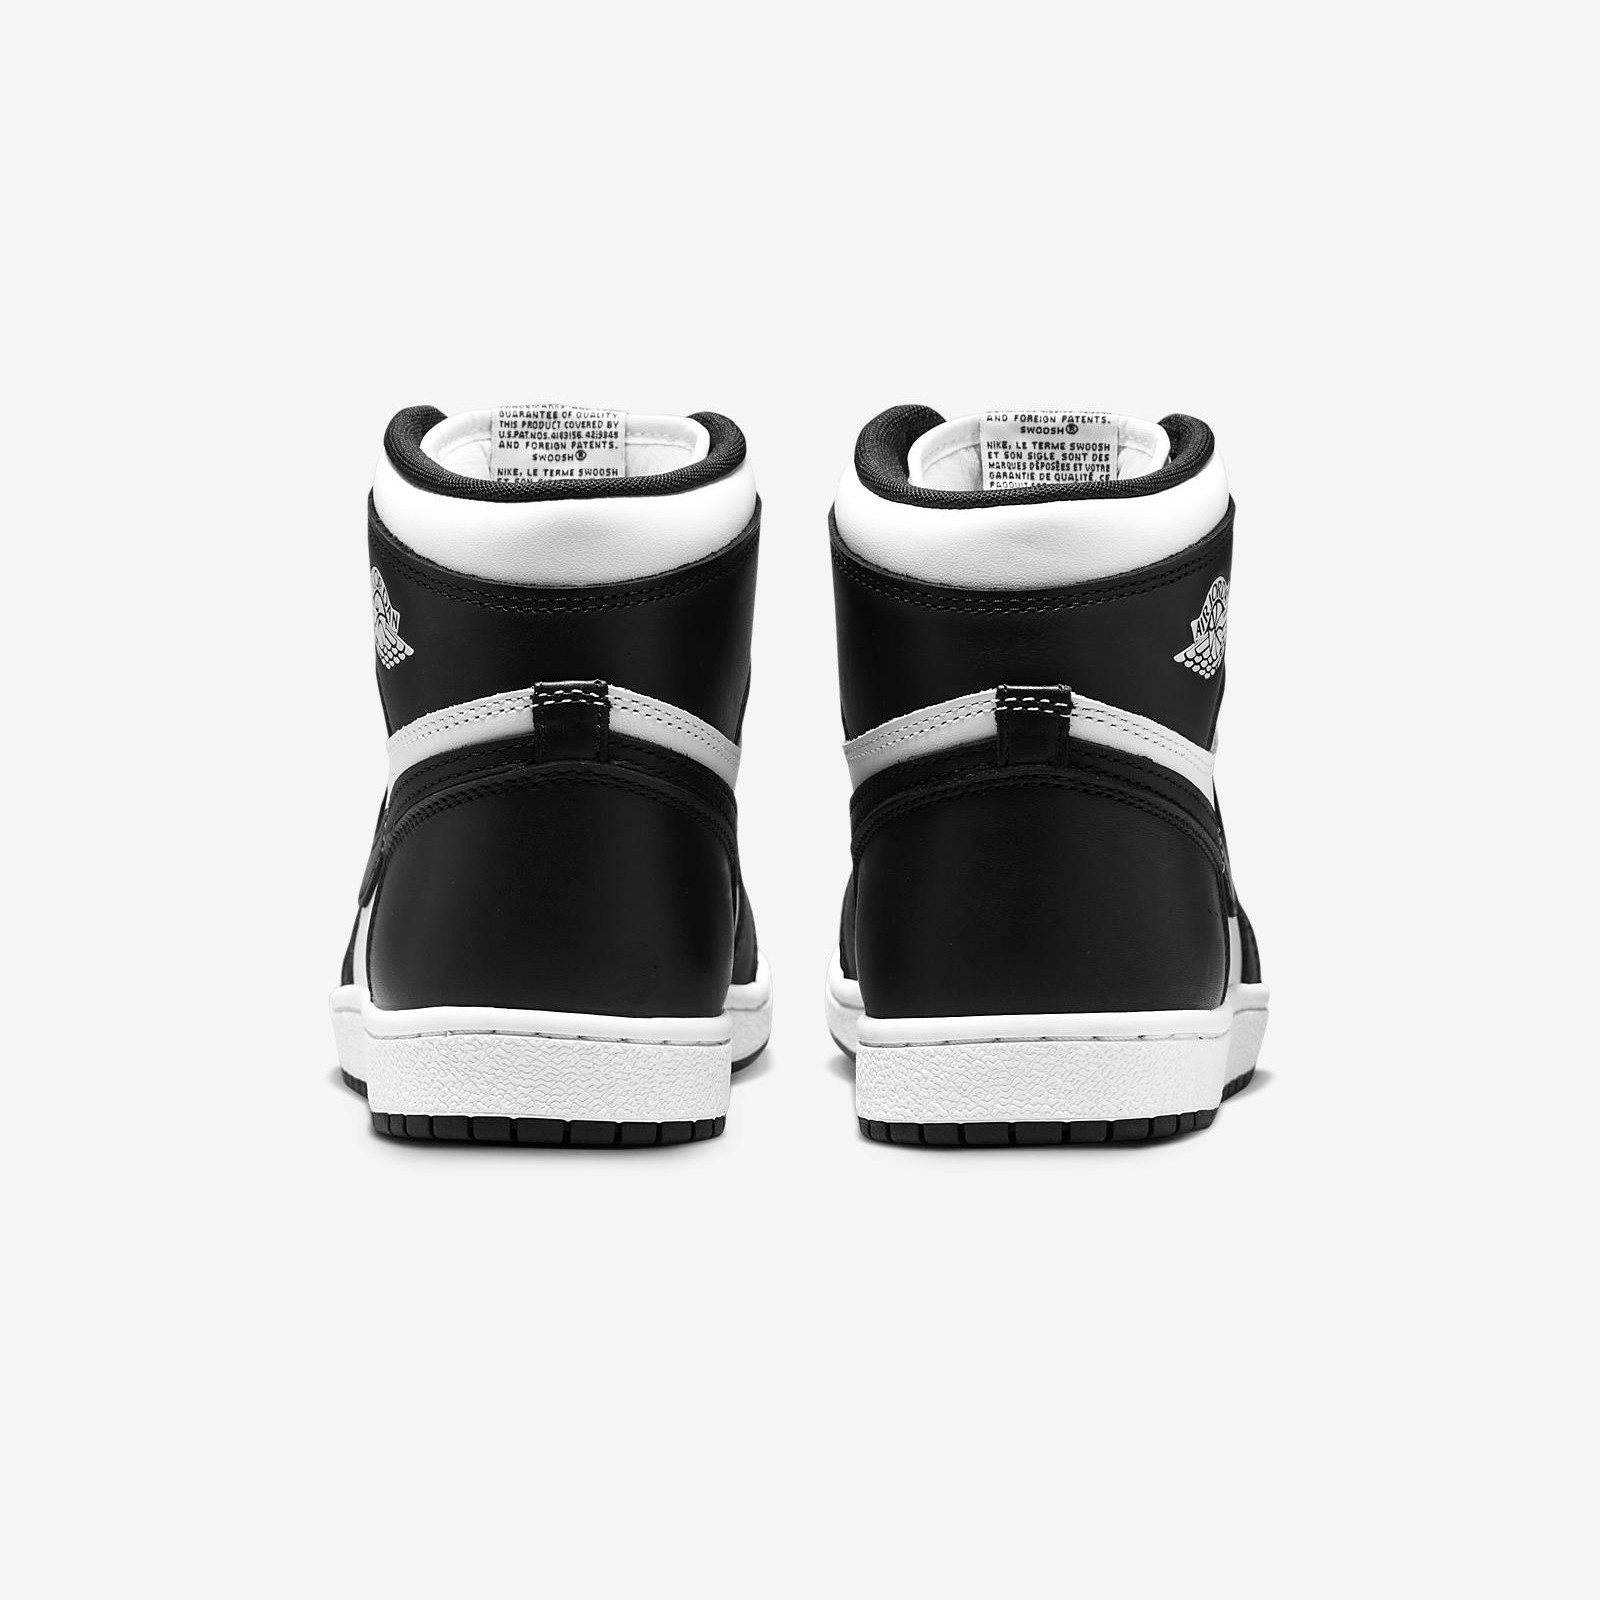 Air Jordan 1 High 85
Black / White